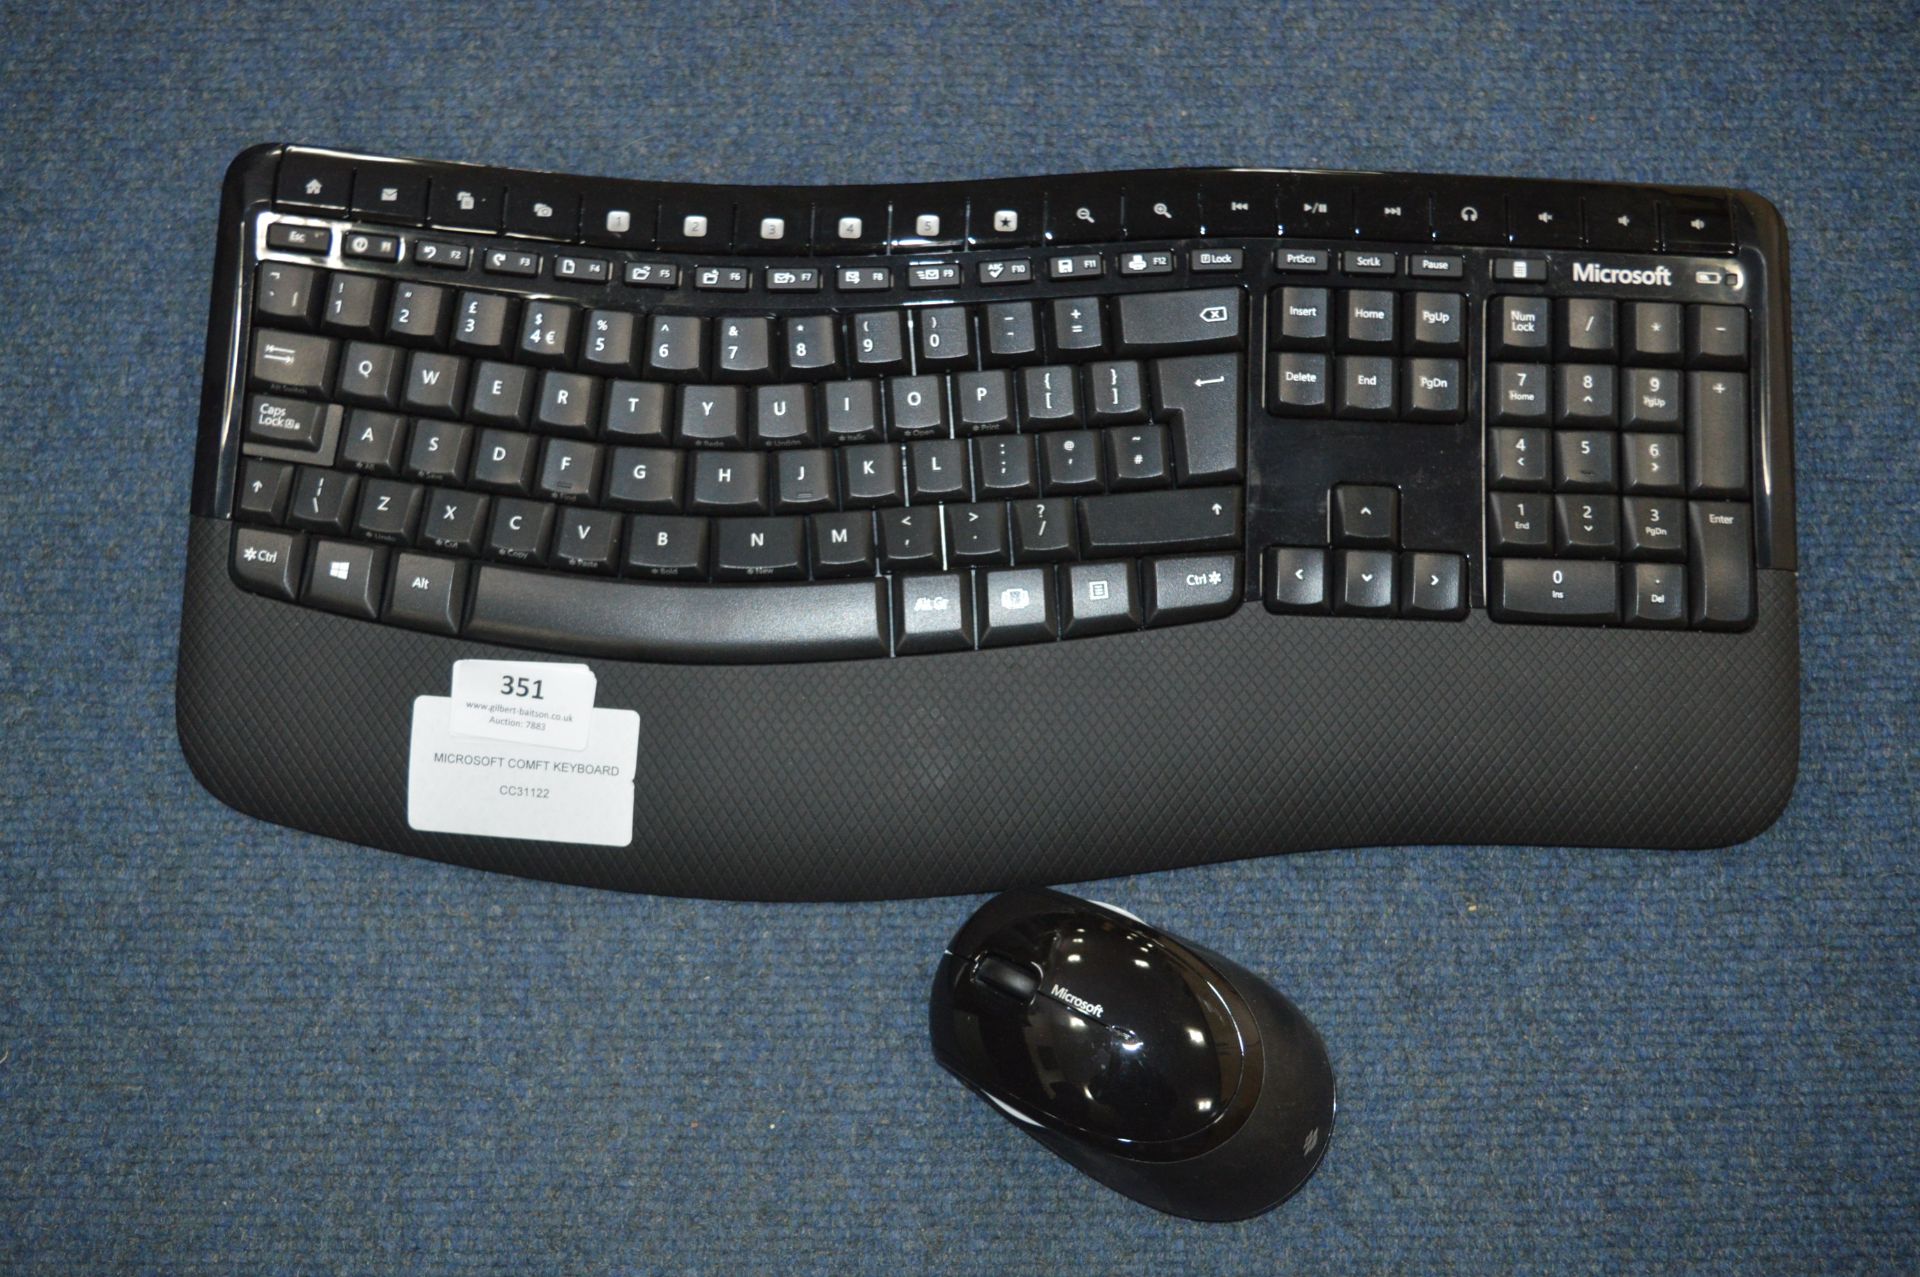 *Microsoft Comfort Keyboard